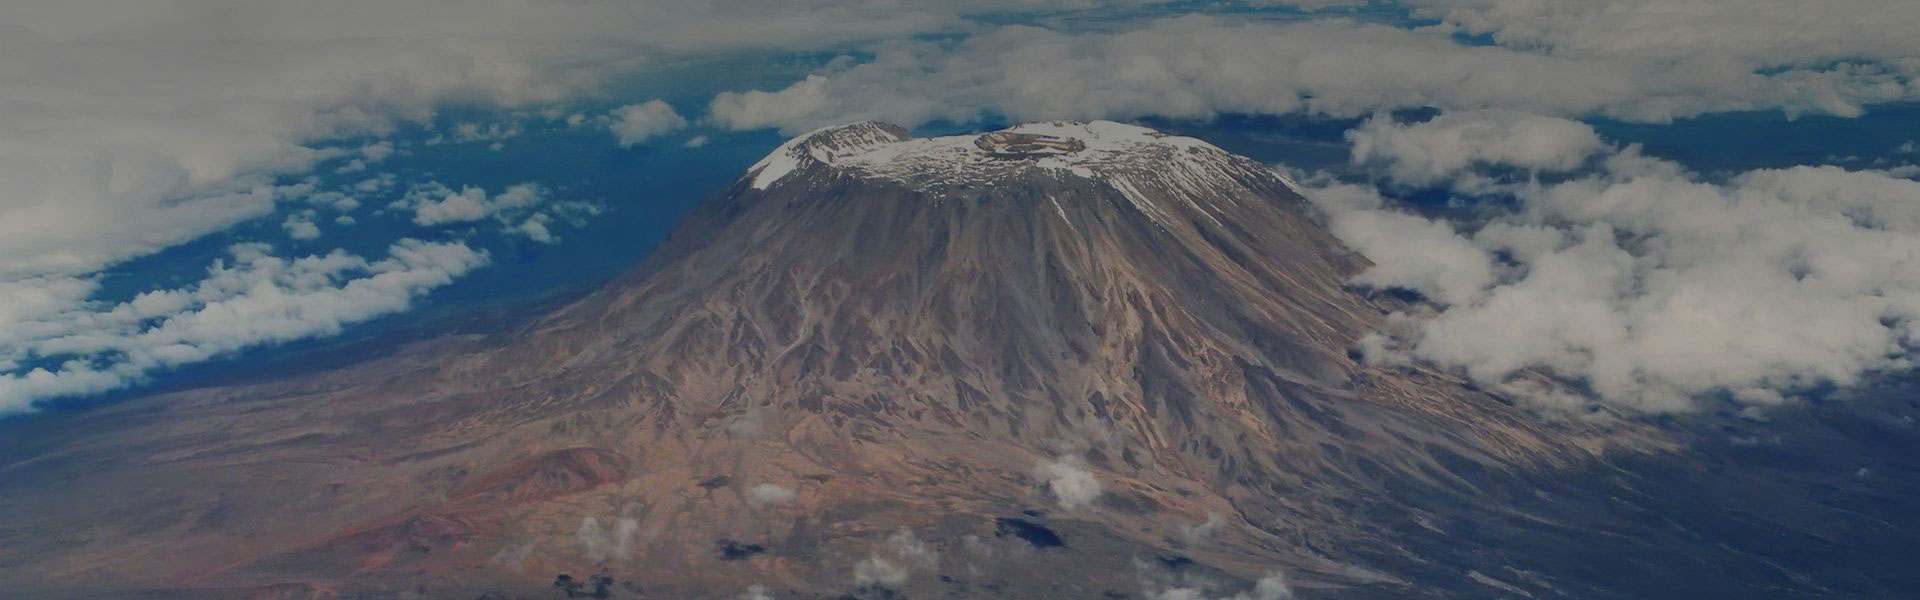 Kilimanjaro Geology